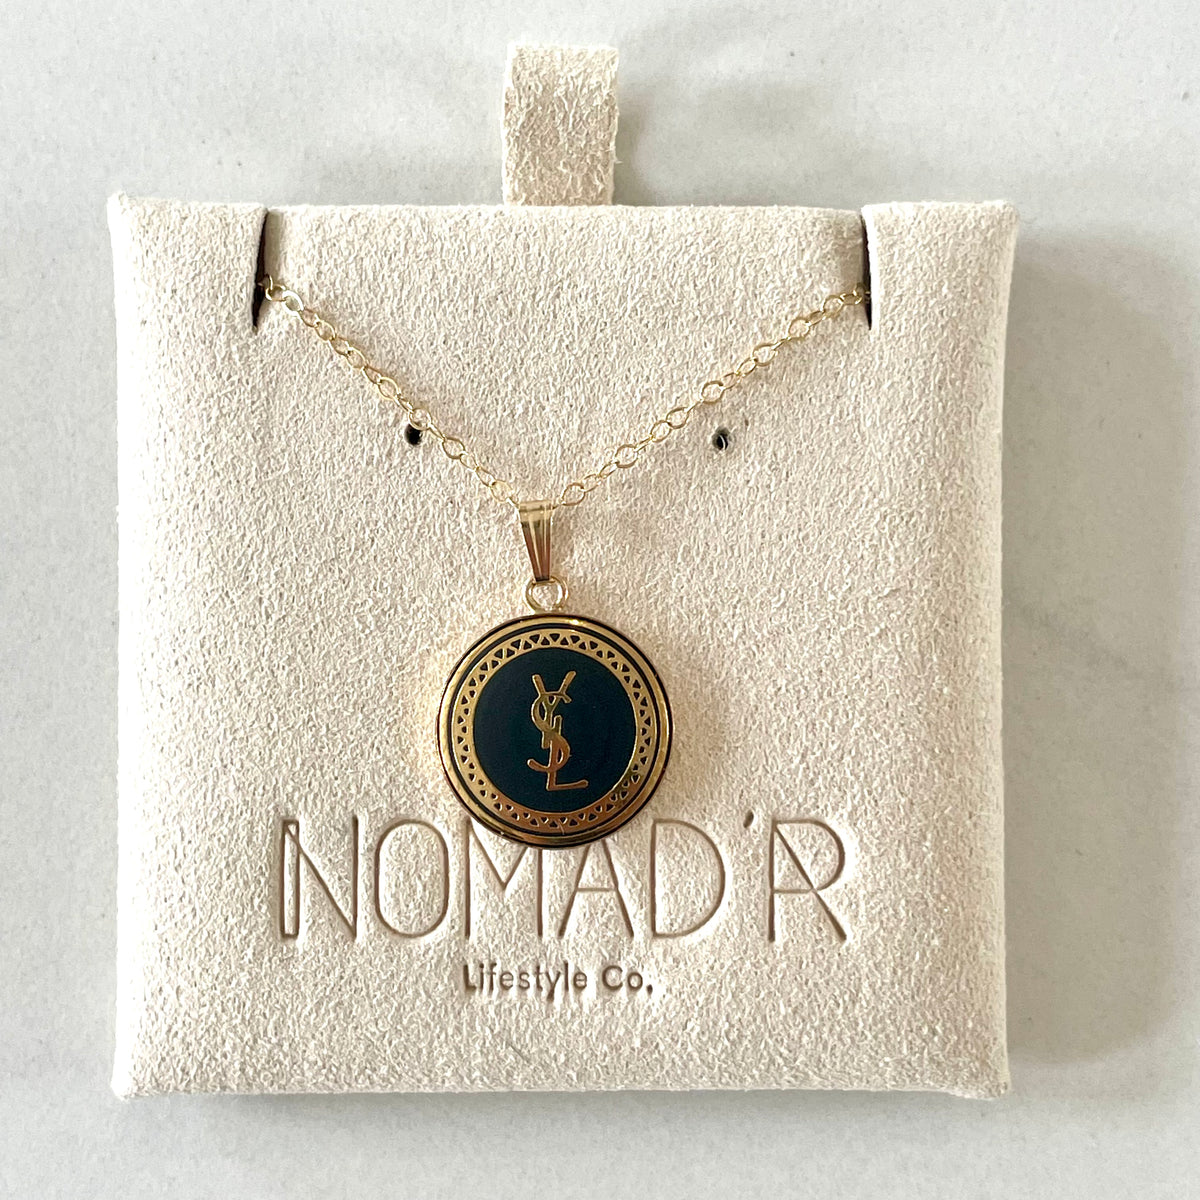 YSL Logo Pendant Necklace- GOLD – Nomad'r Lifestyle Company